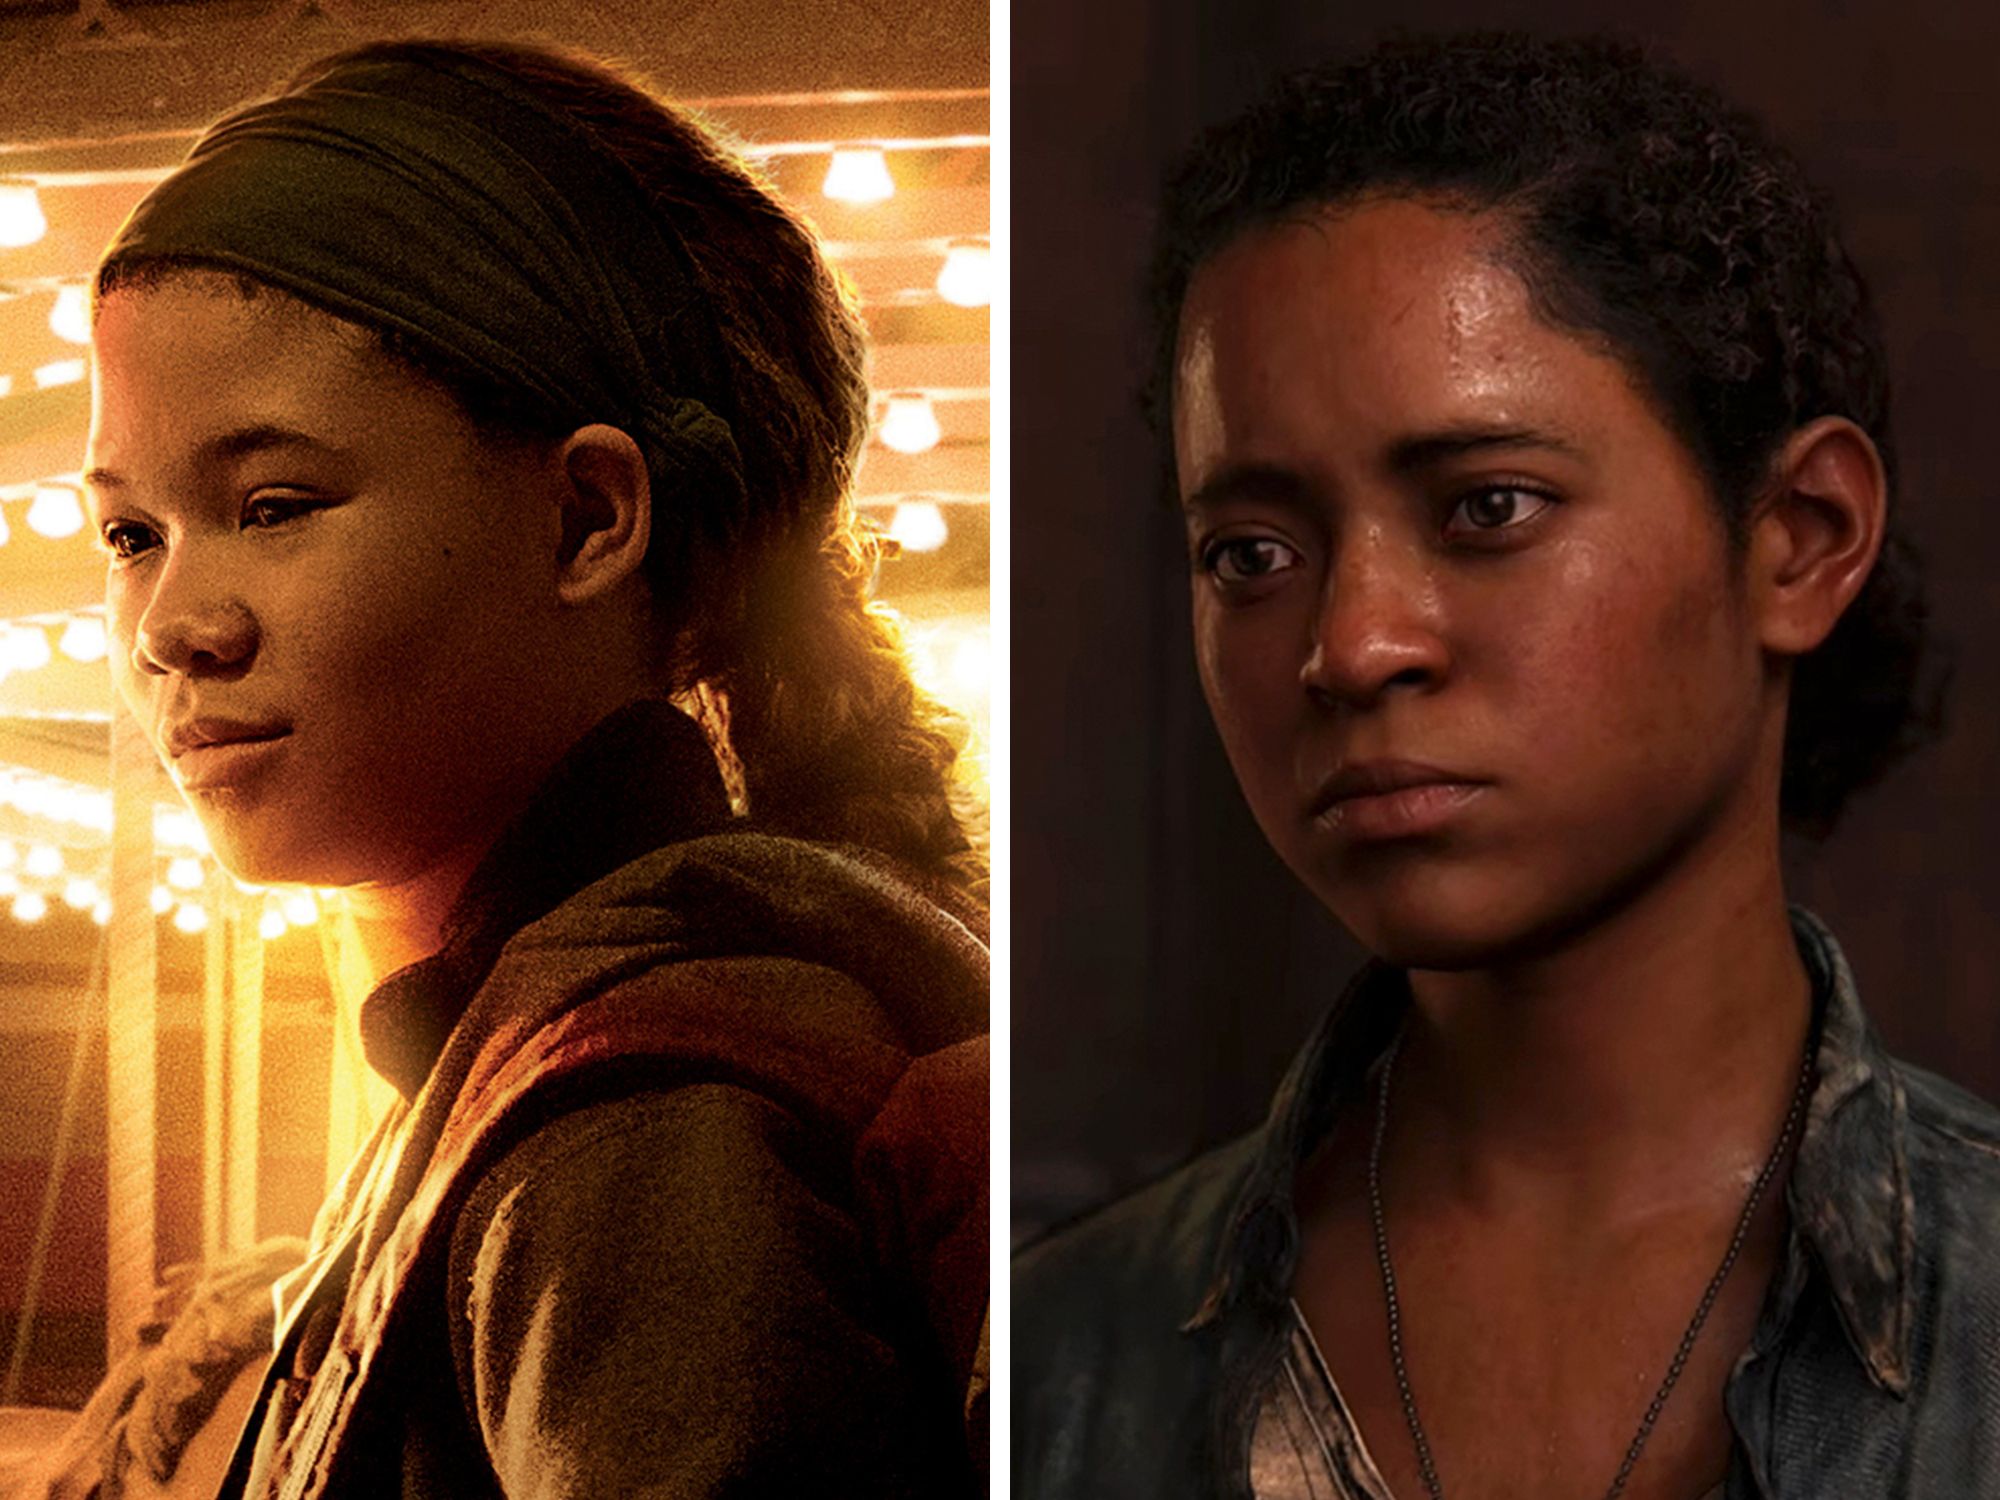 The Last of Us Episode 3: TV Show vs Game Comparison - IGN